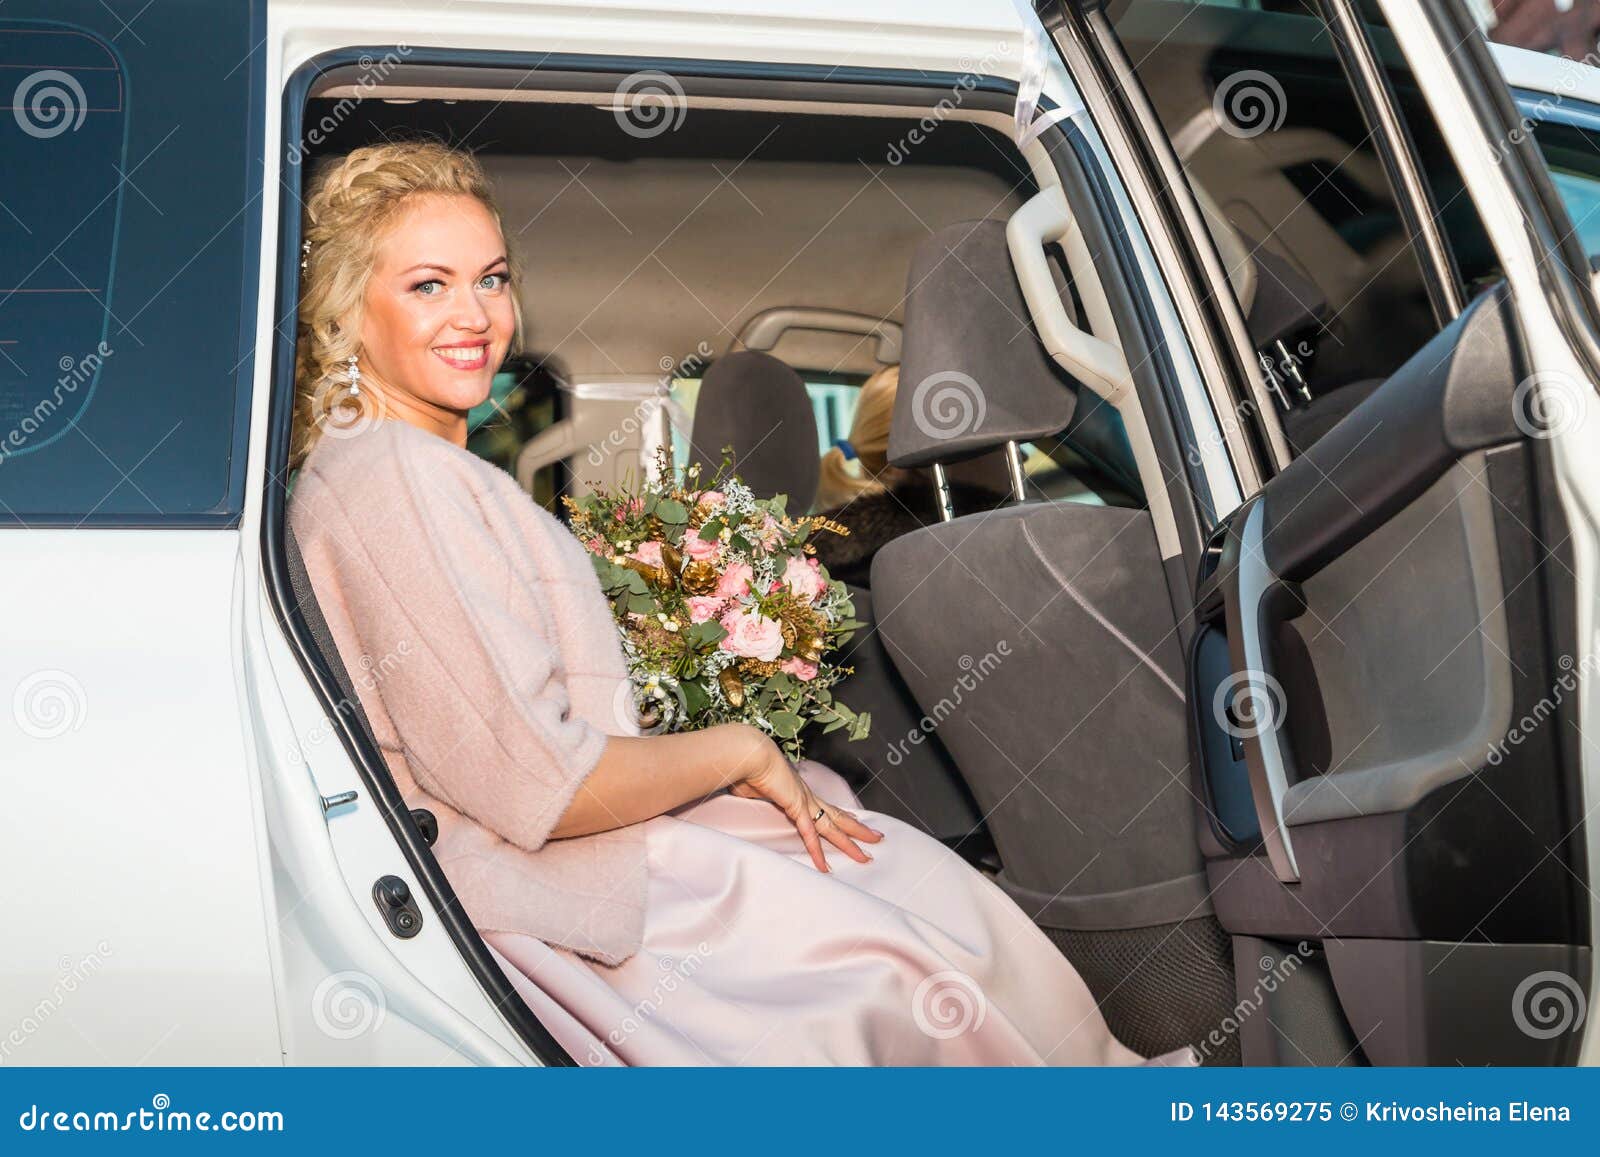 https://thumbs.dreamstime.com/z/beautiful-russian-bride-car-city-day-beautiful-russian-bride-car-city-143569275.jpg